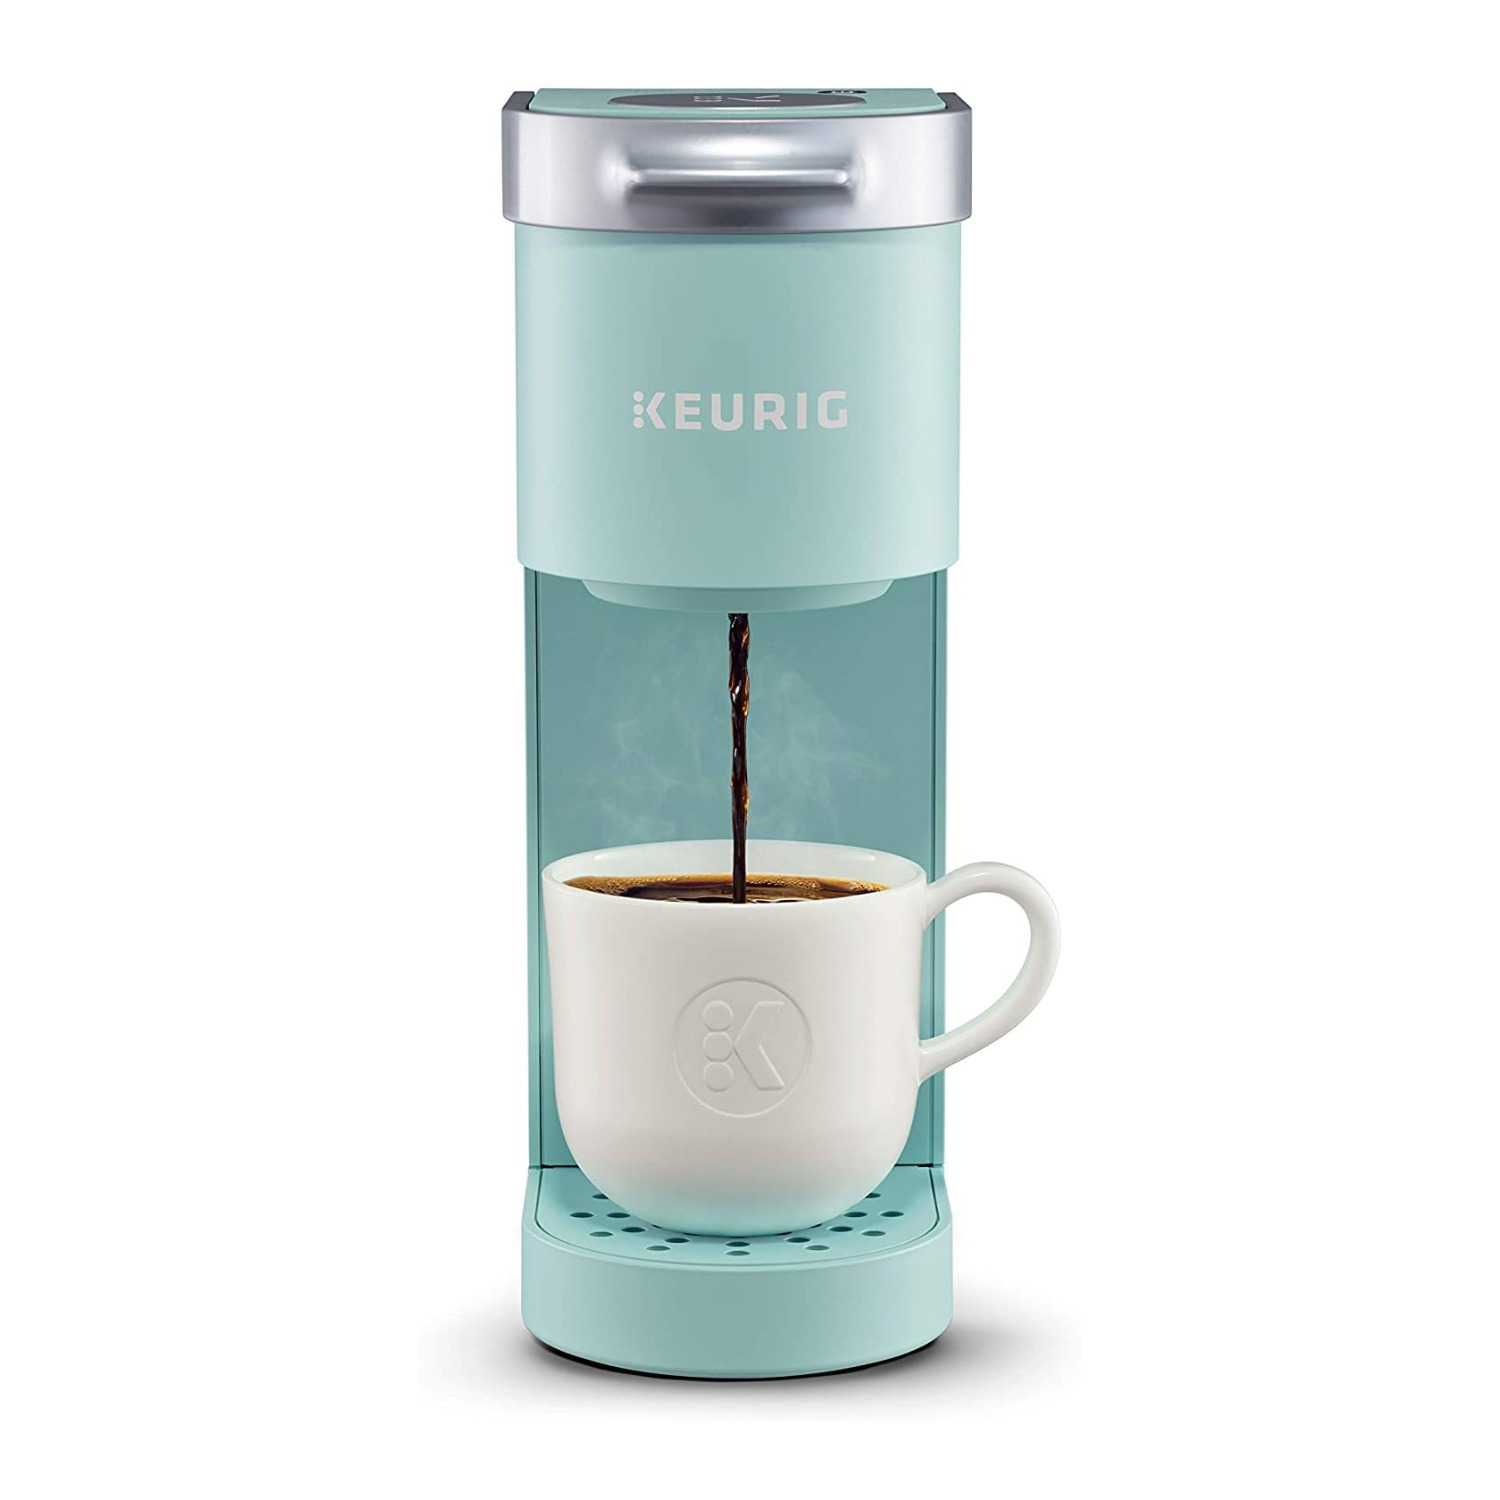 Keurig K-Mini Single Serve Coffee Maker (Oasis) with Stainless Steel Tumbler - image 3 of 6